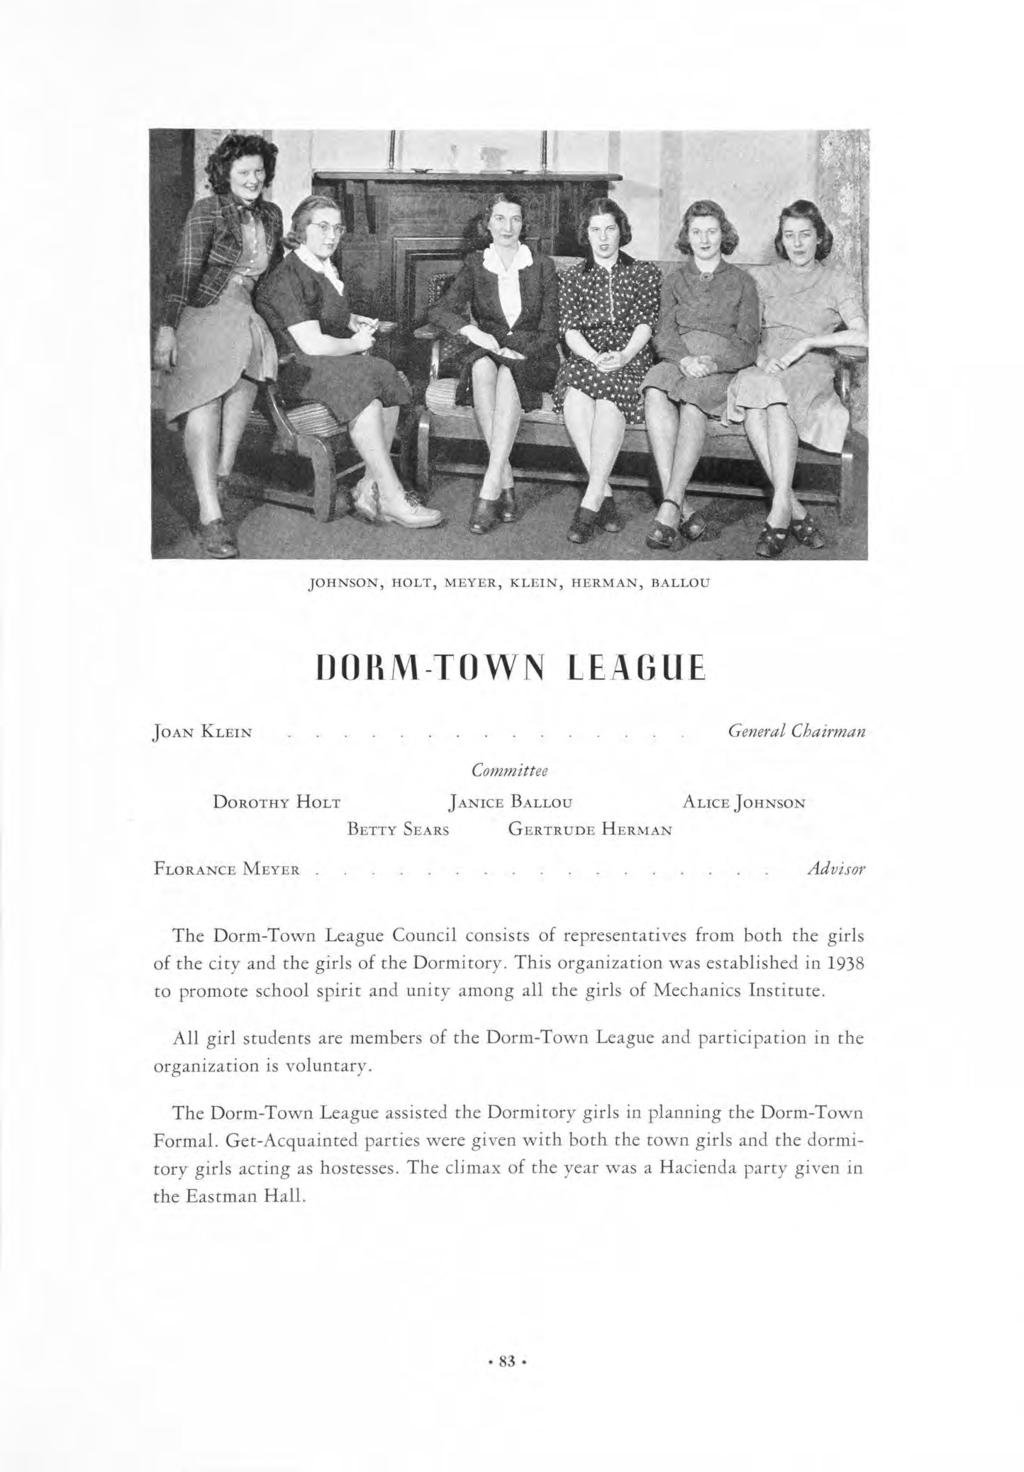 JOHNSON, HOLT, MEYER, KLEIN, HERMAN, BALLOU DORM-TOWN LEAGUE JOAN KLEIN General Chairman Committee DOROTHY HOLT JANICE BALLOU ALICE JOHNSON BETTY SEARS GERTRUDE HERMAN FLORANCE MEYER.